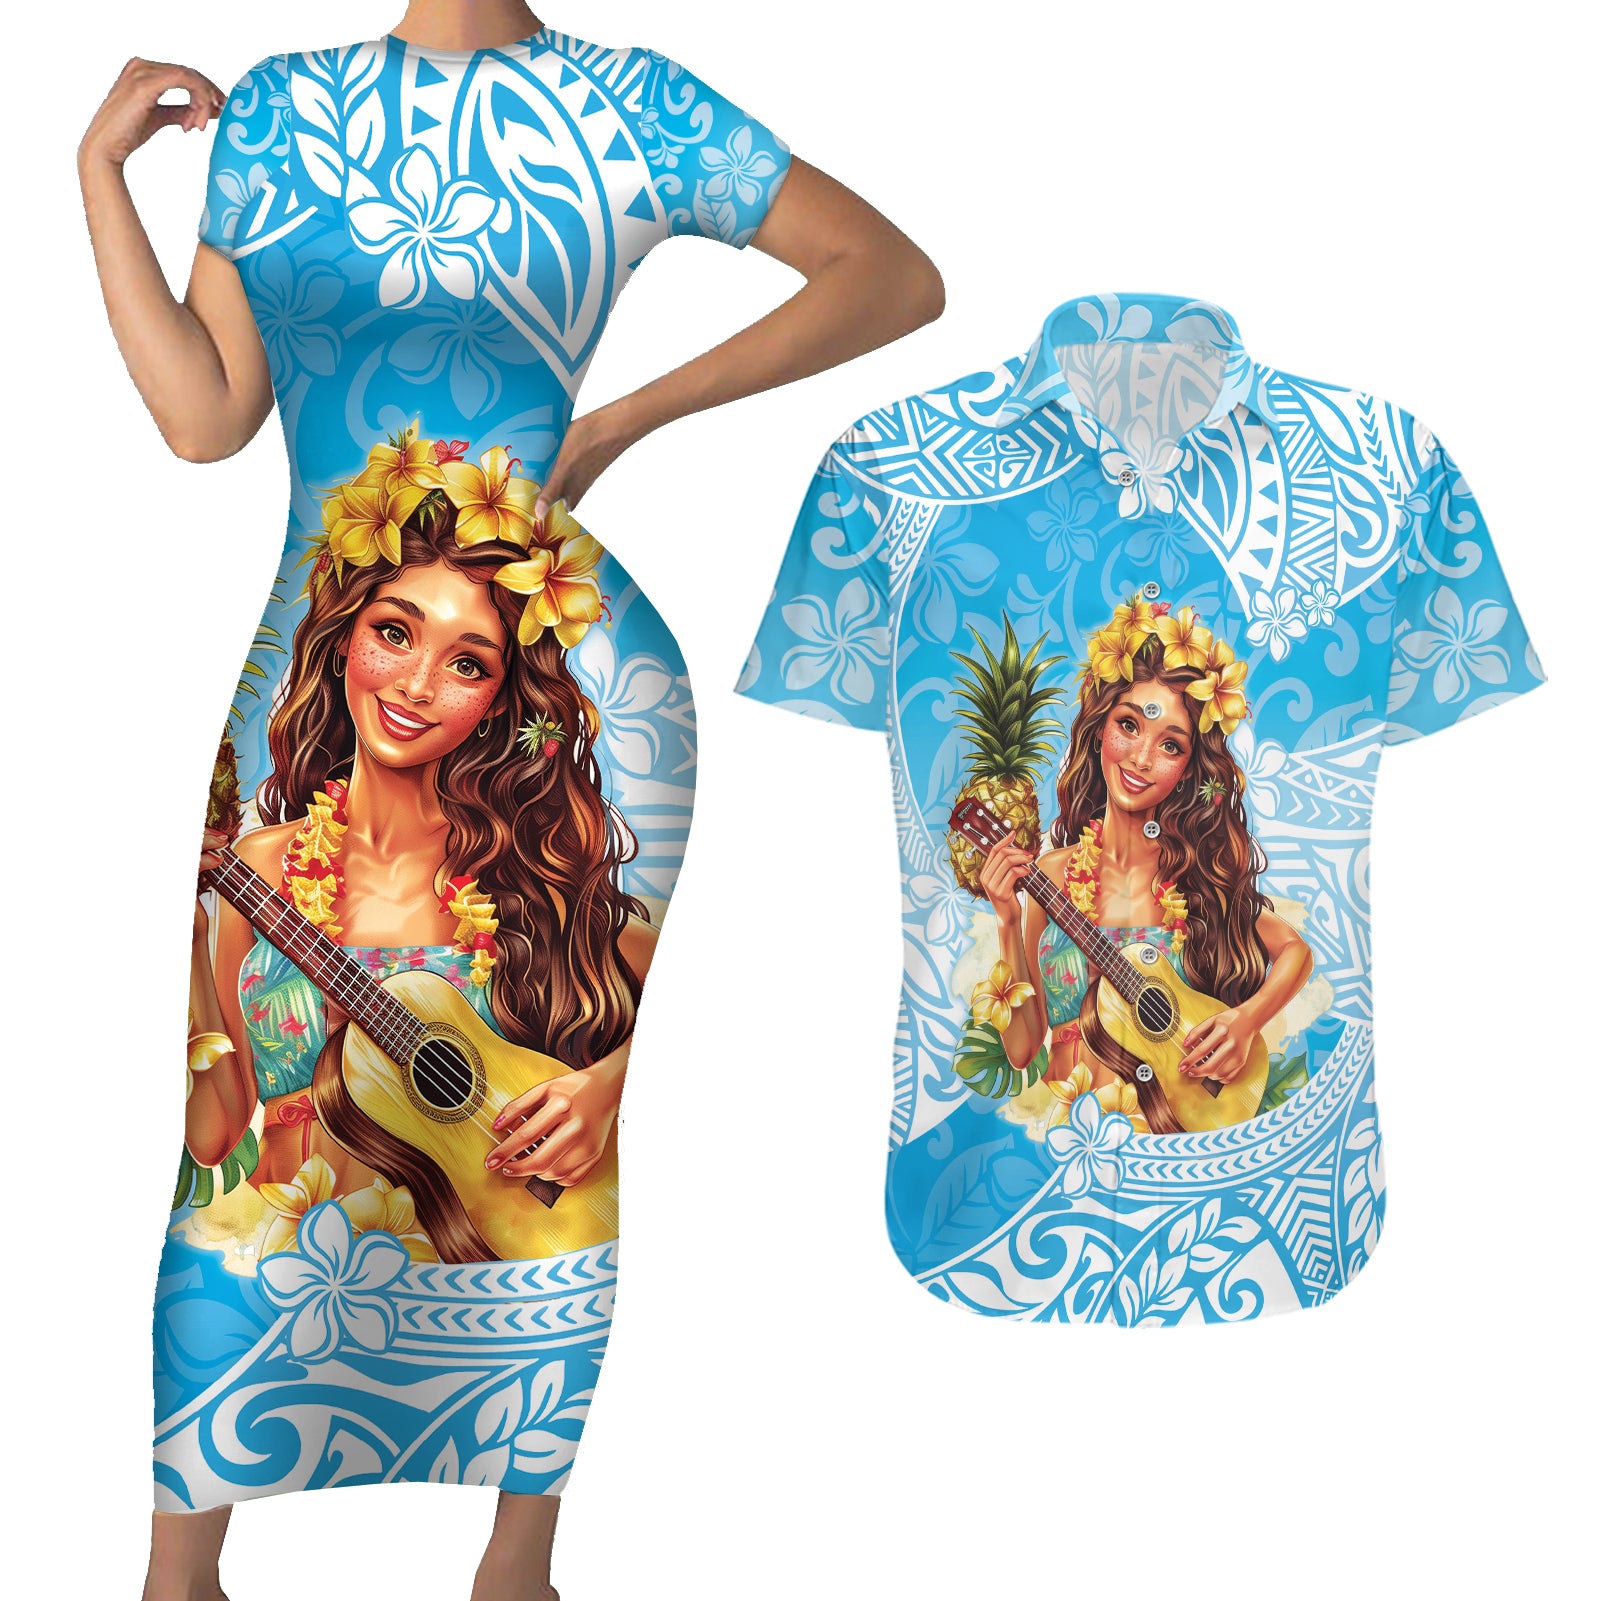 Aloha Hawaii Women's Day Couples Matching Short Sleeve Bodycon Dress and Hawaiian Shirt Hula Girl With Ukulele Tropical Style LT14 Blue - Polynesian Pride